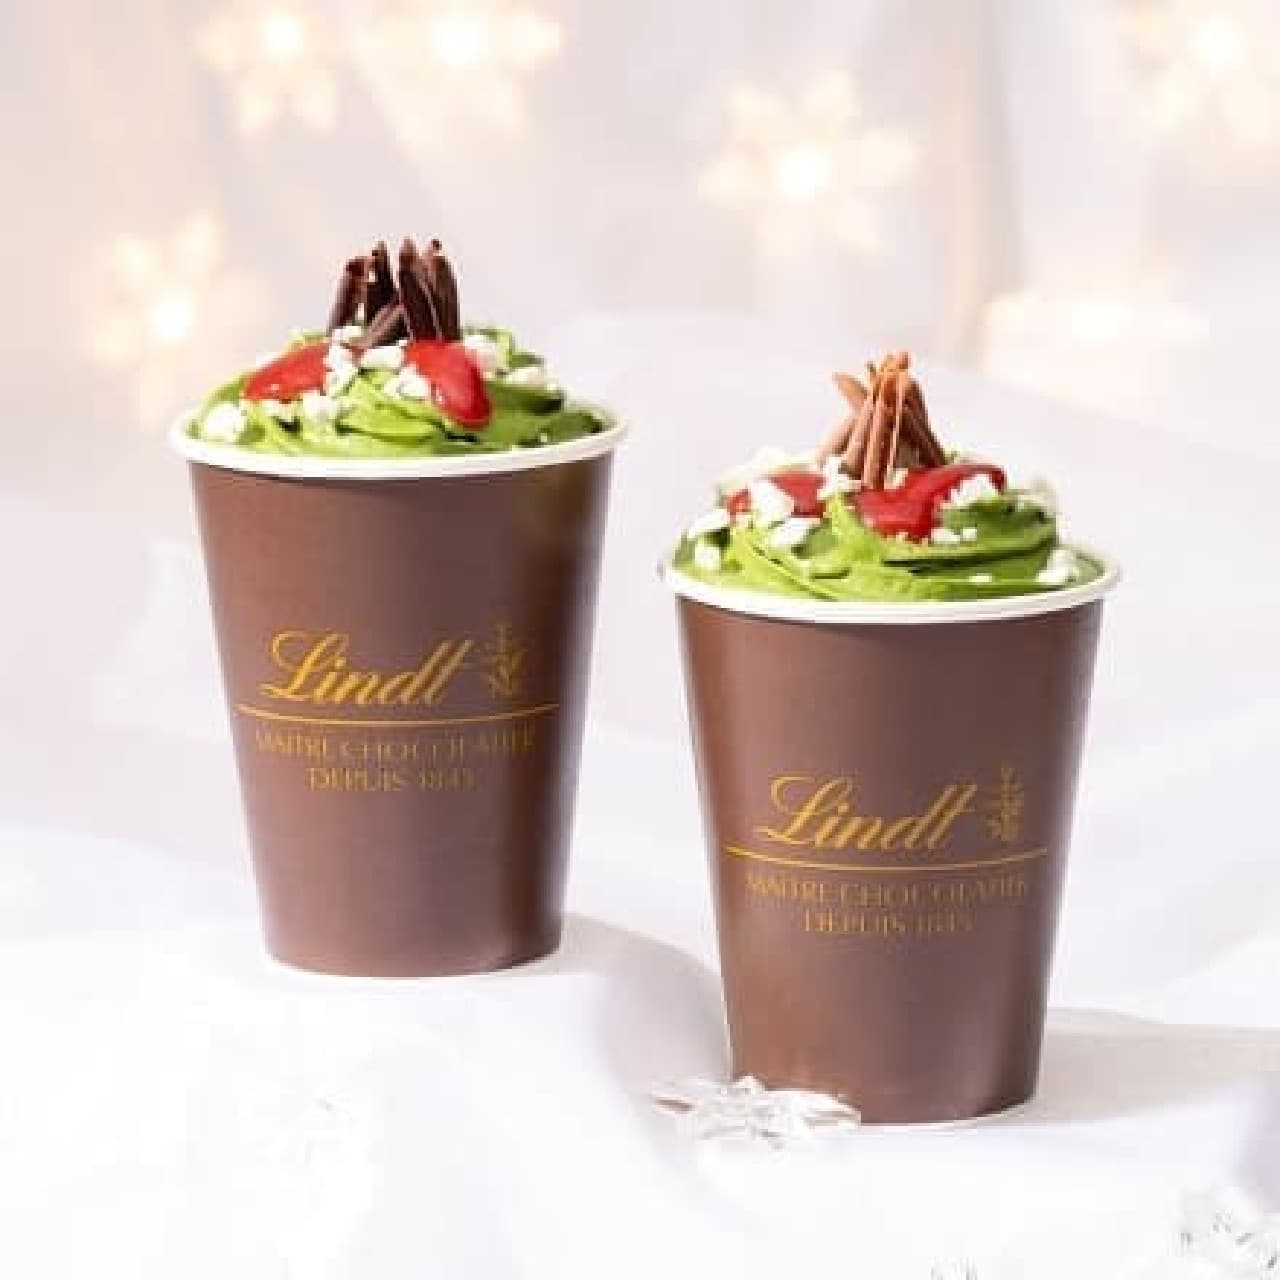 Linz Chocolat Cafe "Lintz Matcha Hot Chocolate Drink"